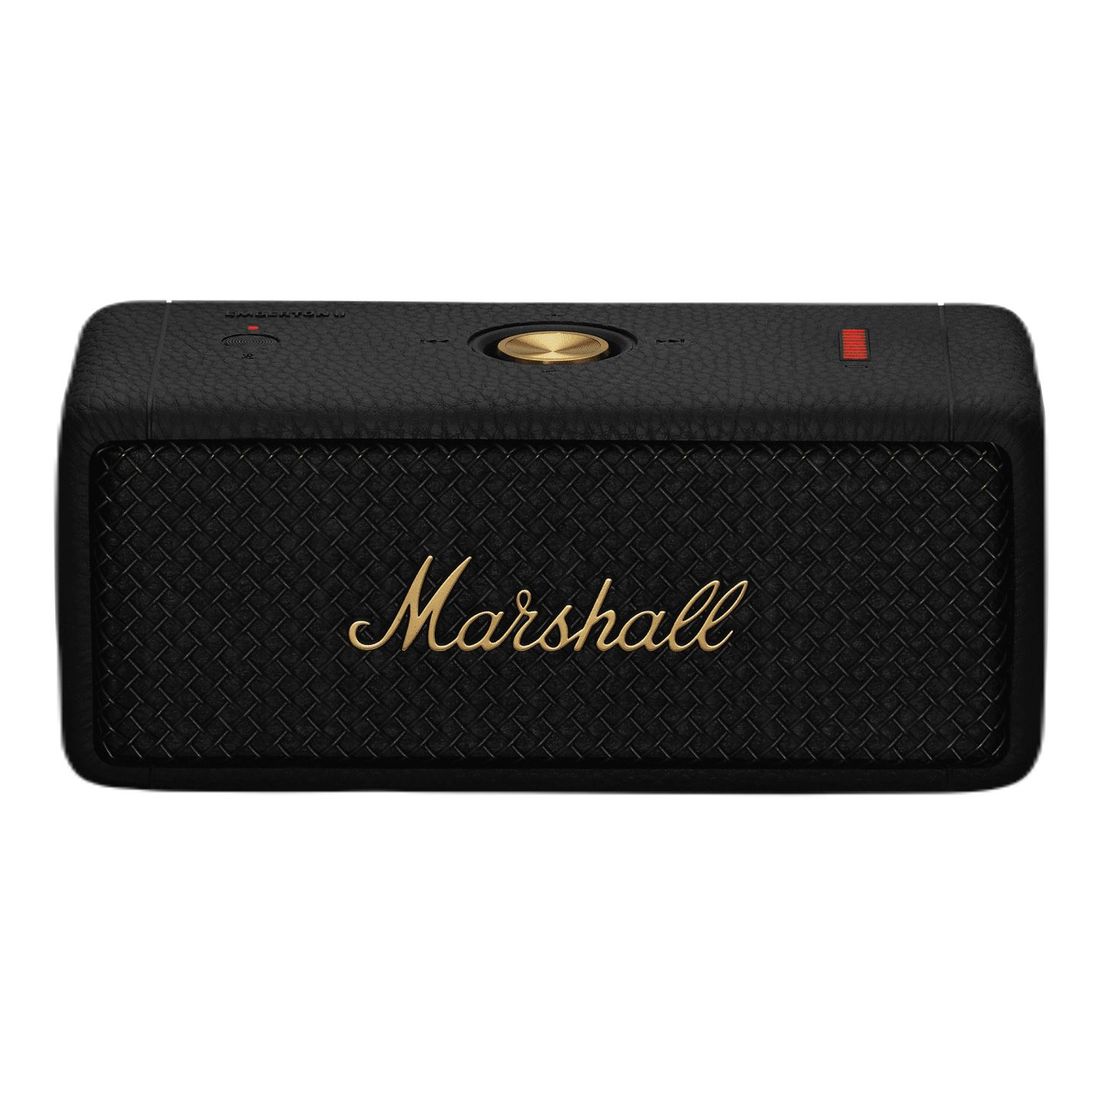 Marshall Emberton II Outdoor Speaker - Black/Brass